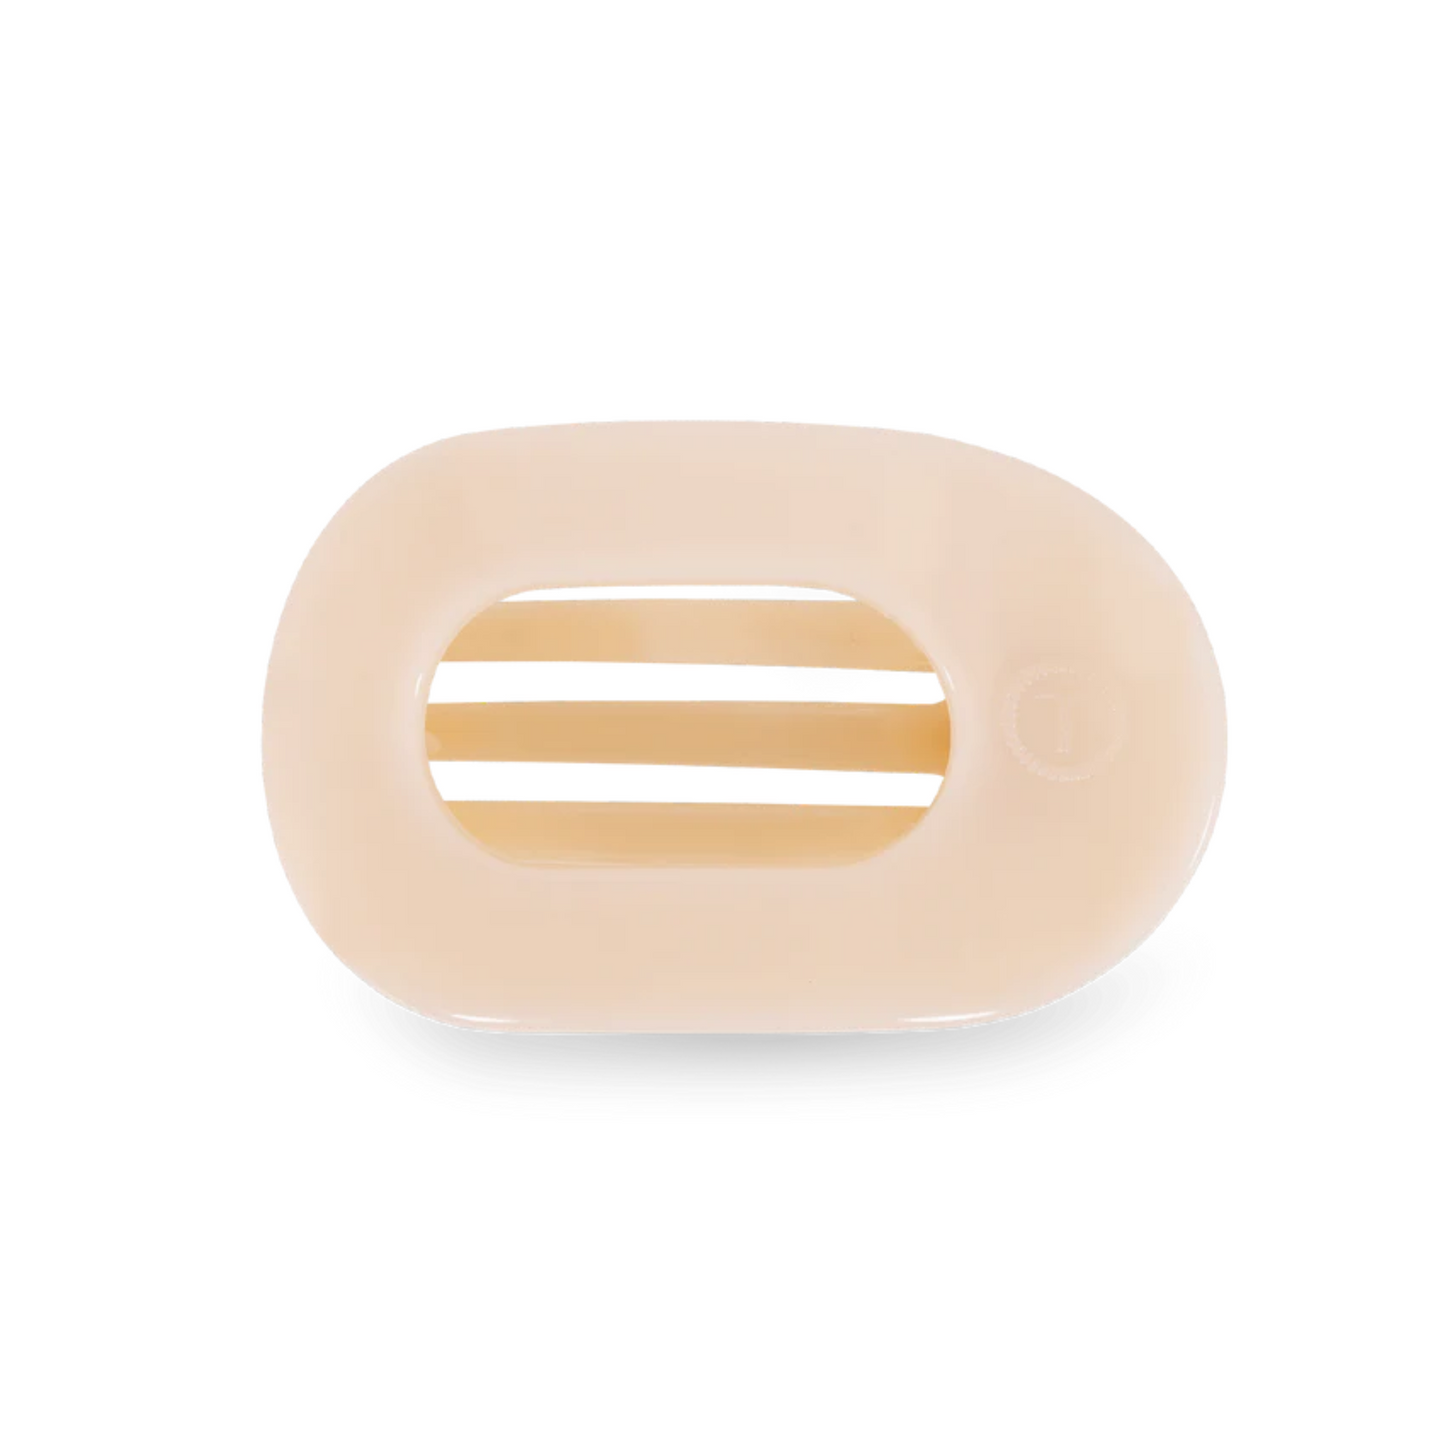 Smal flat round clip in almond beige